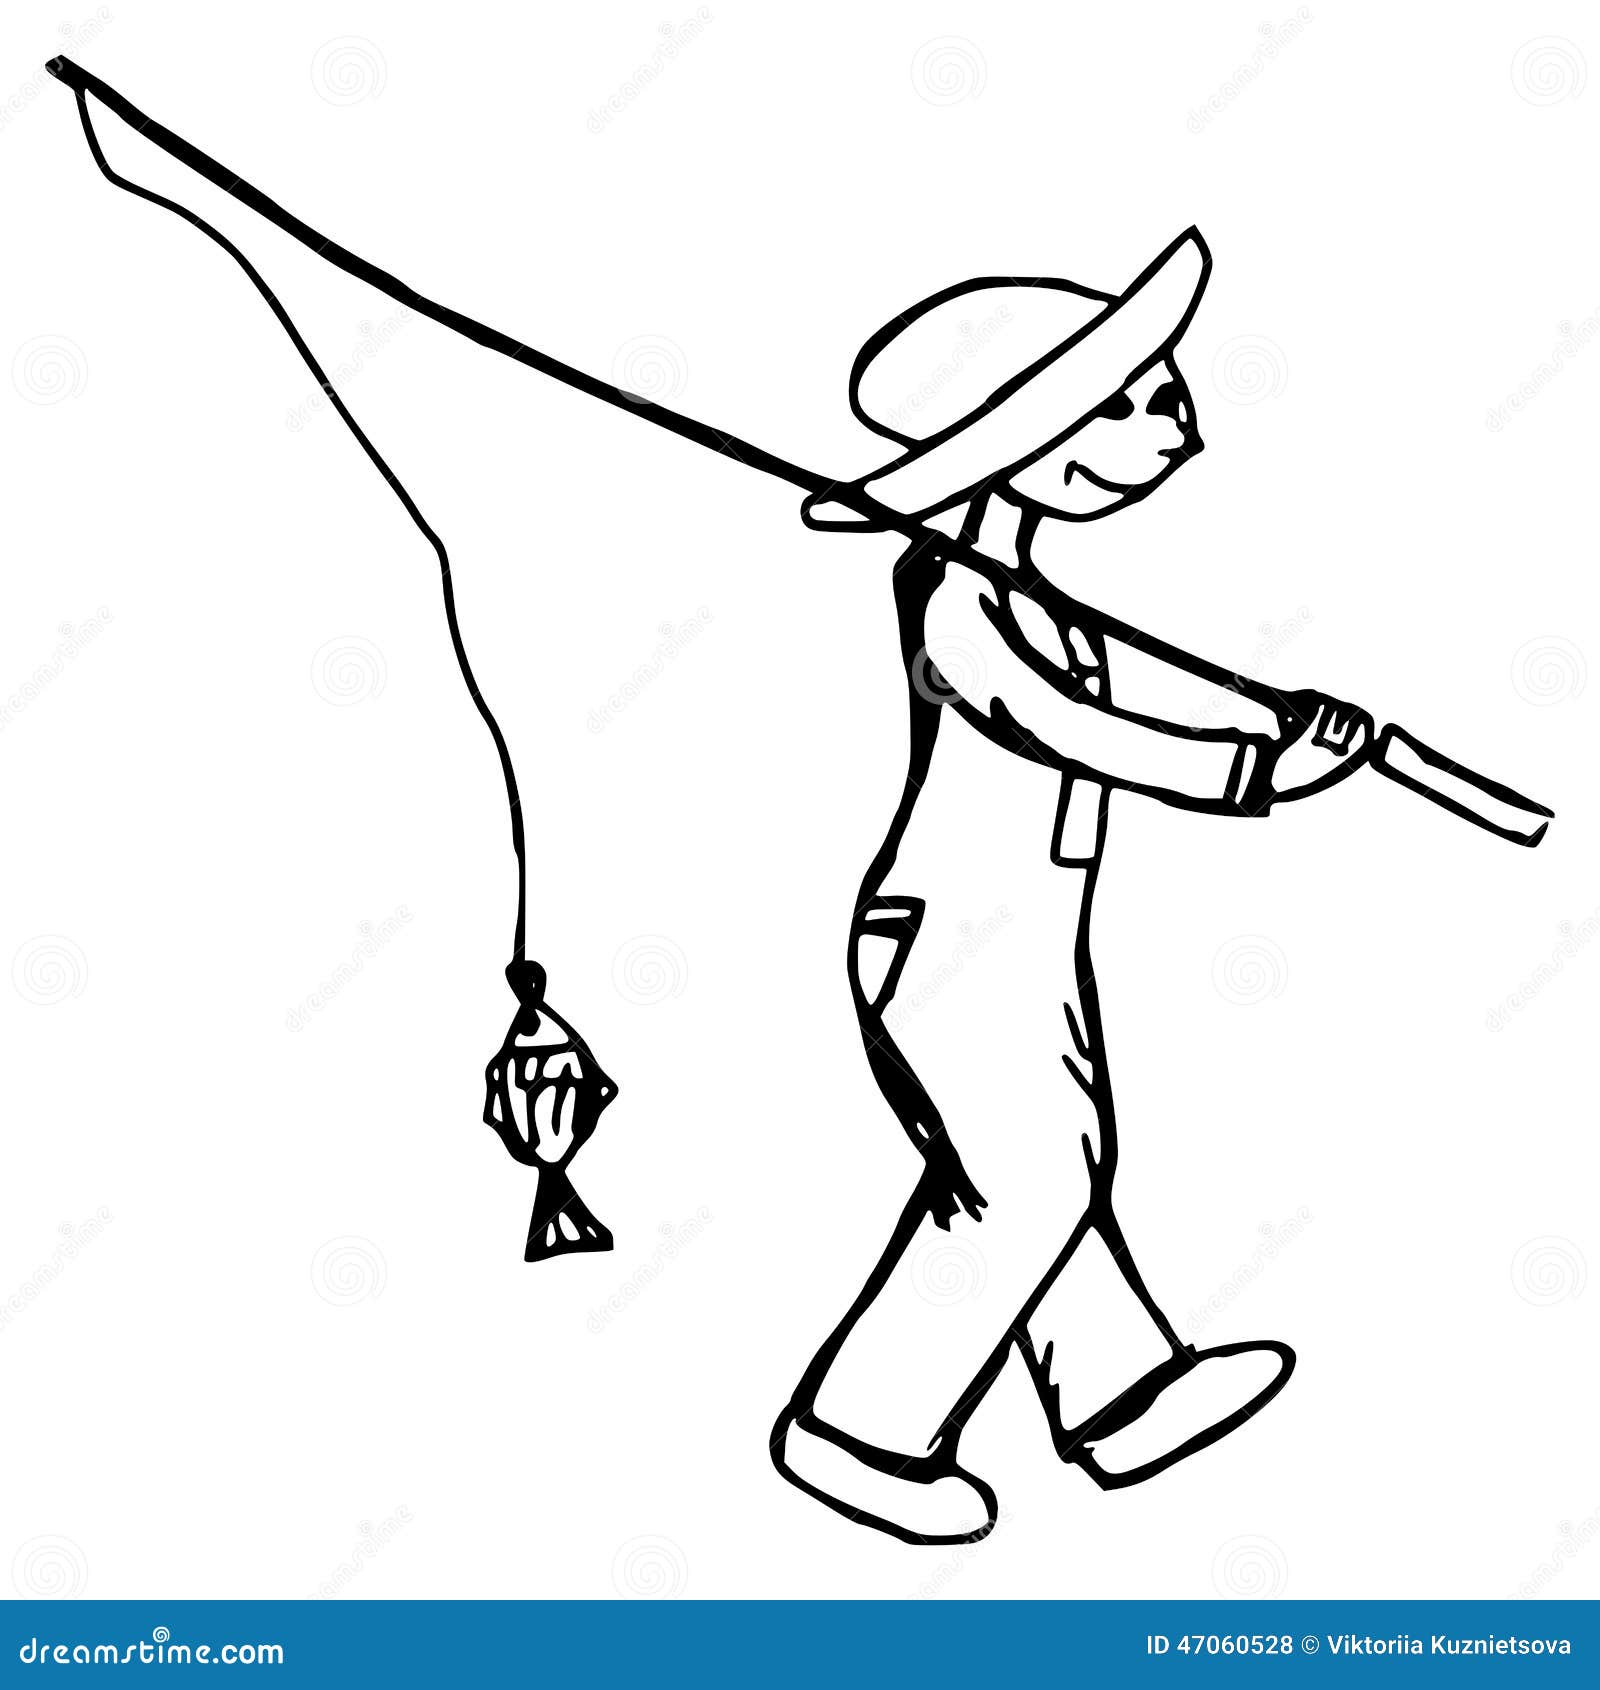 Fisherman stock illustration. Illustration of freshwater - 47060528